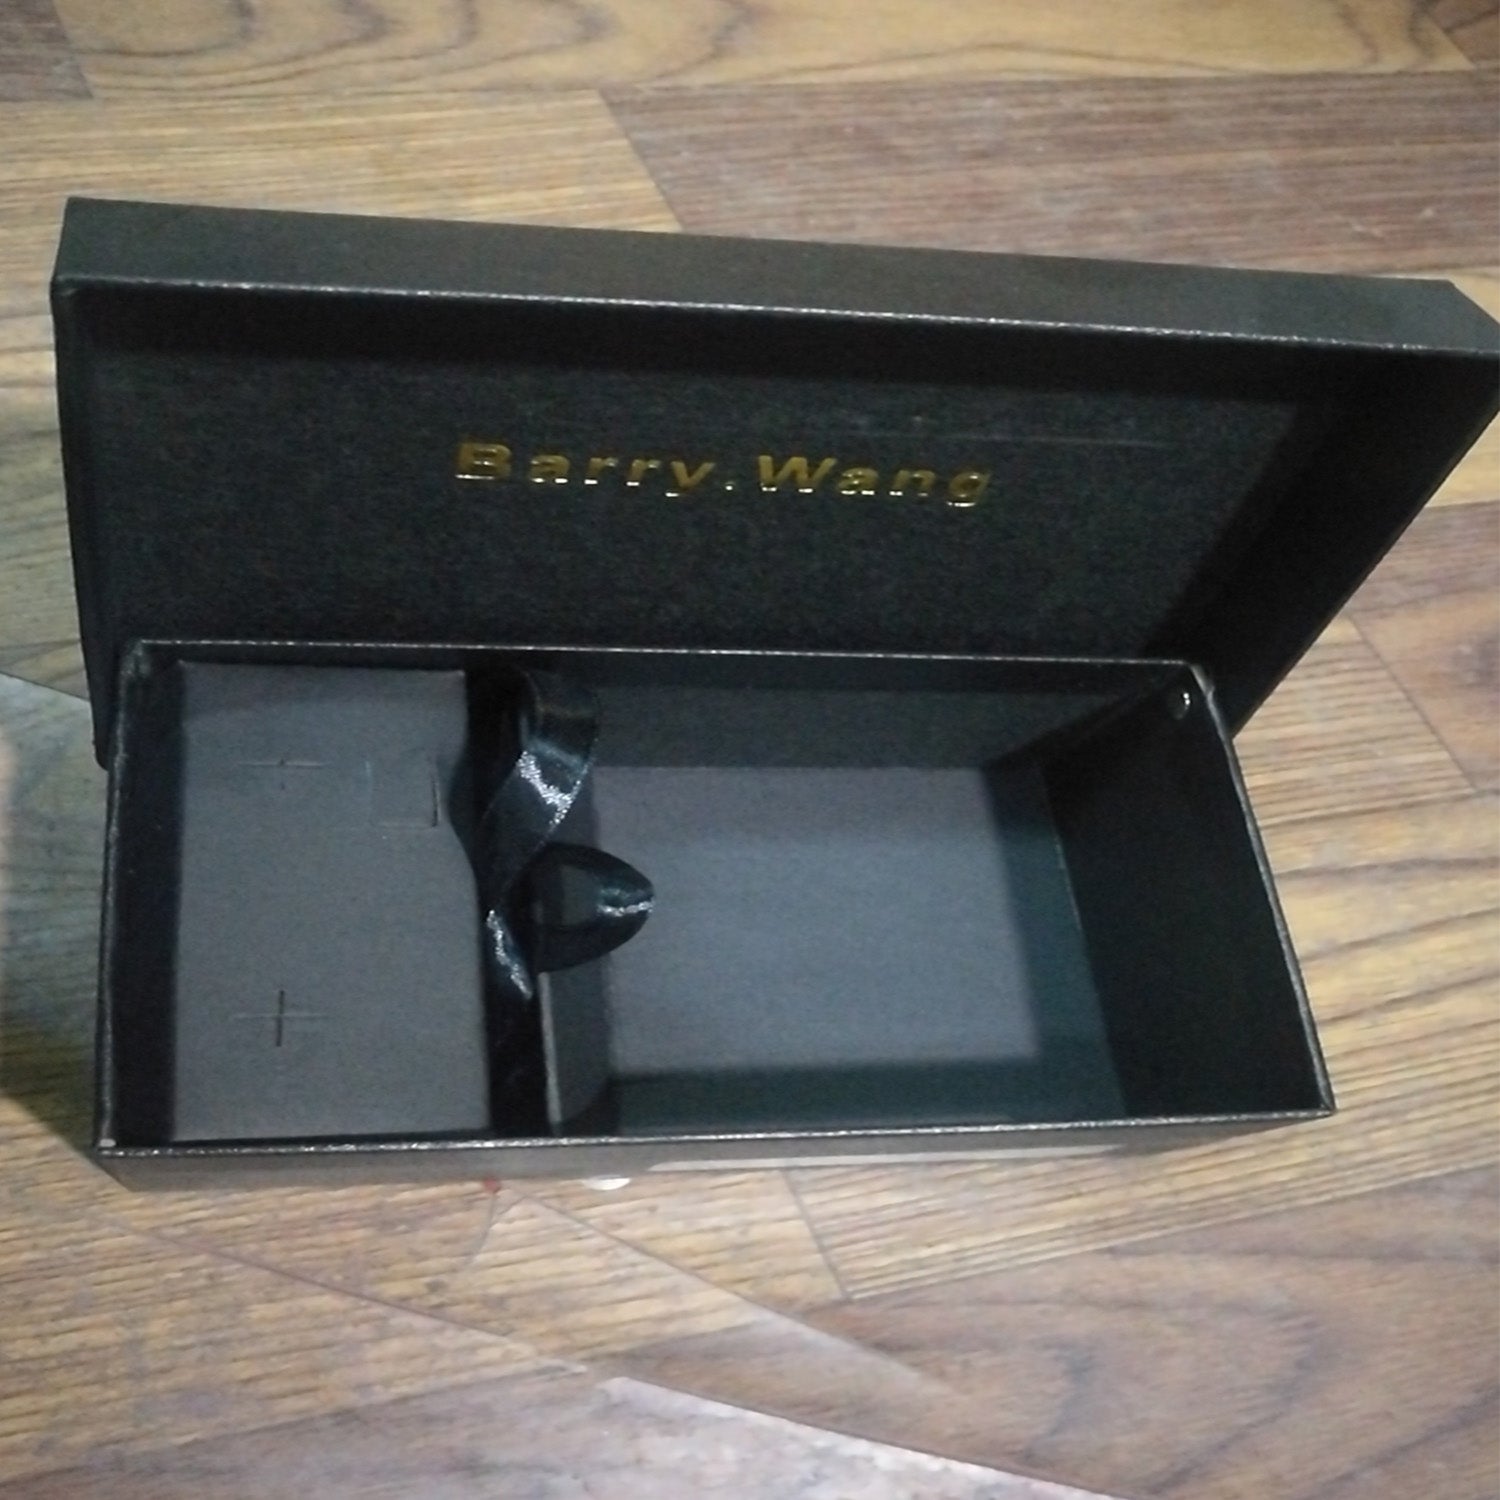 Barry.wang Men's Tie Box Classic Necktie Gift Box Set